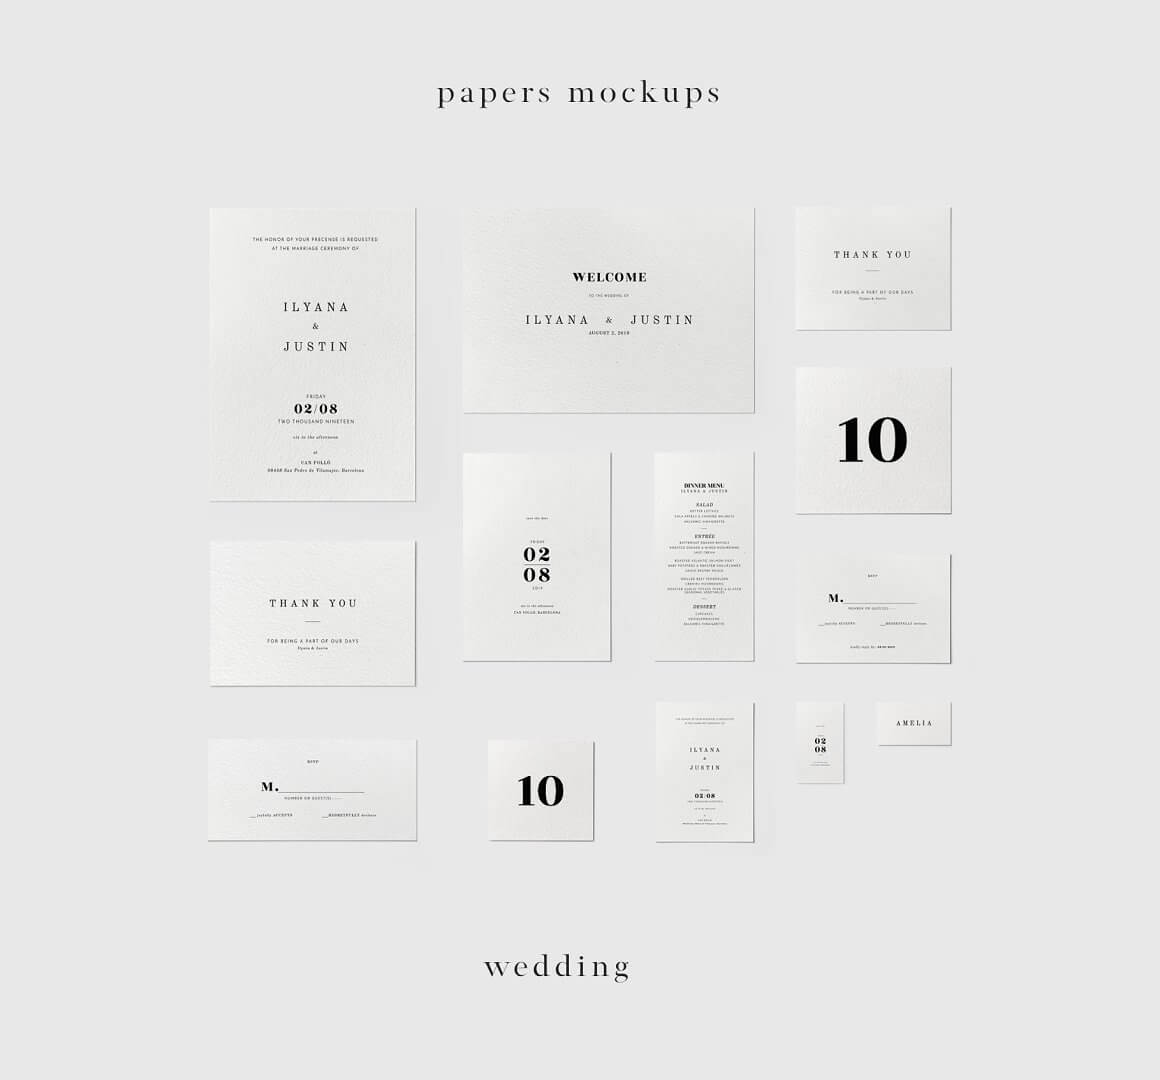 Papers Mockups Wedding.